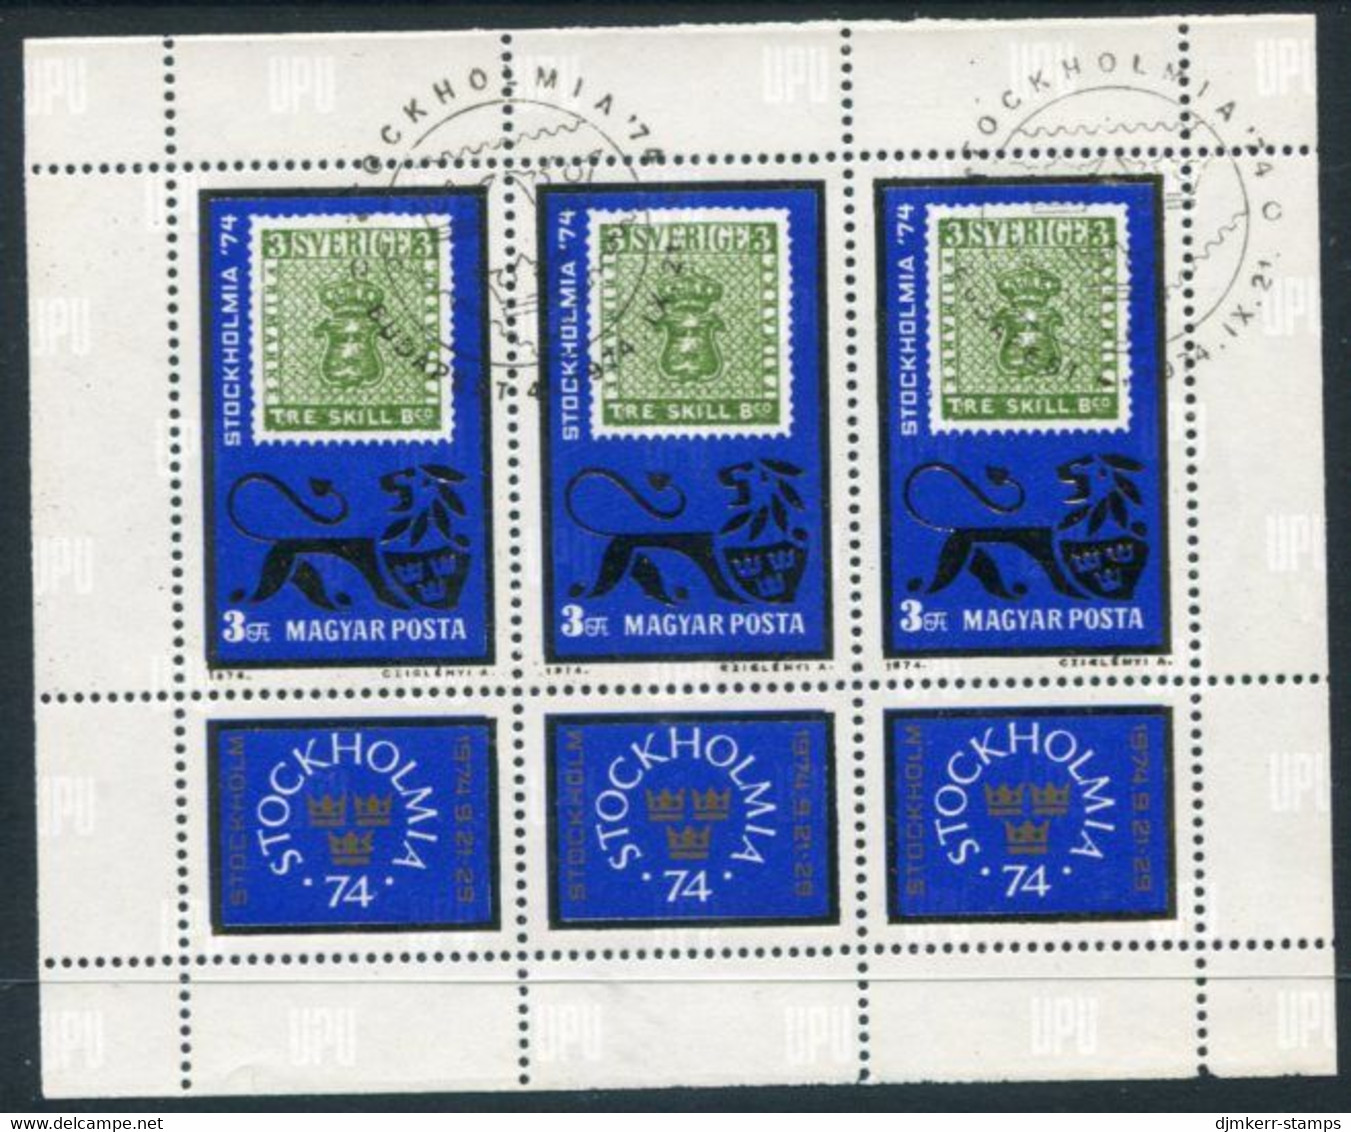 HUNGARY 1974 STOCKHOLMIA Stamp Exhibition Sheetlet Used.  Michel 2981 Kb - Blocks & Kleinbögen